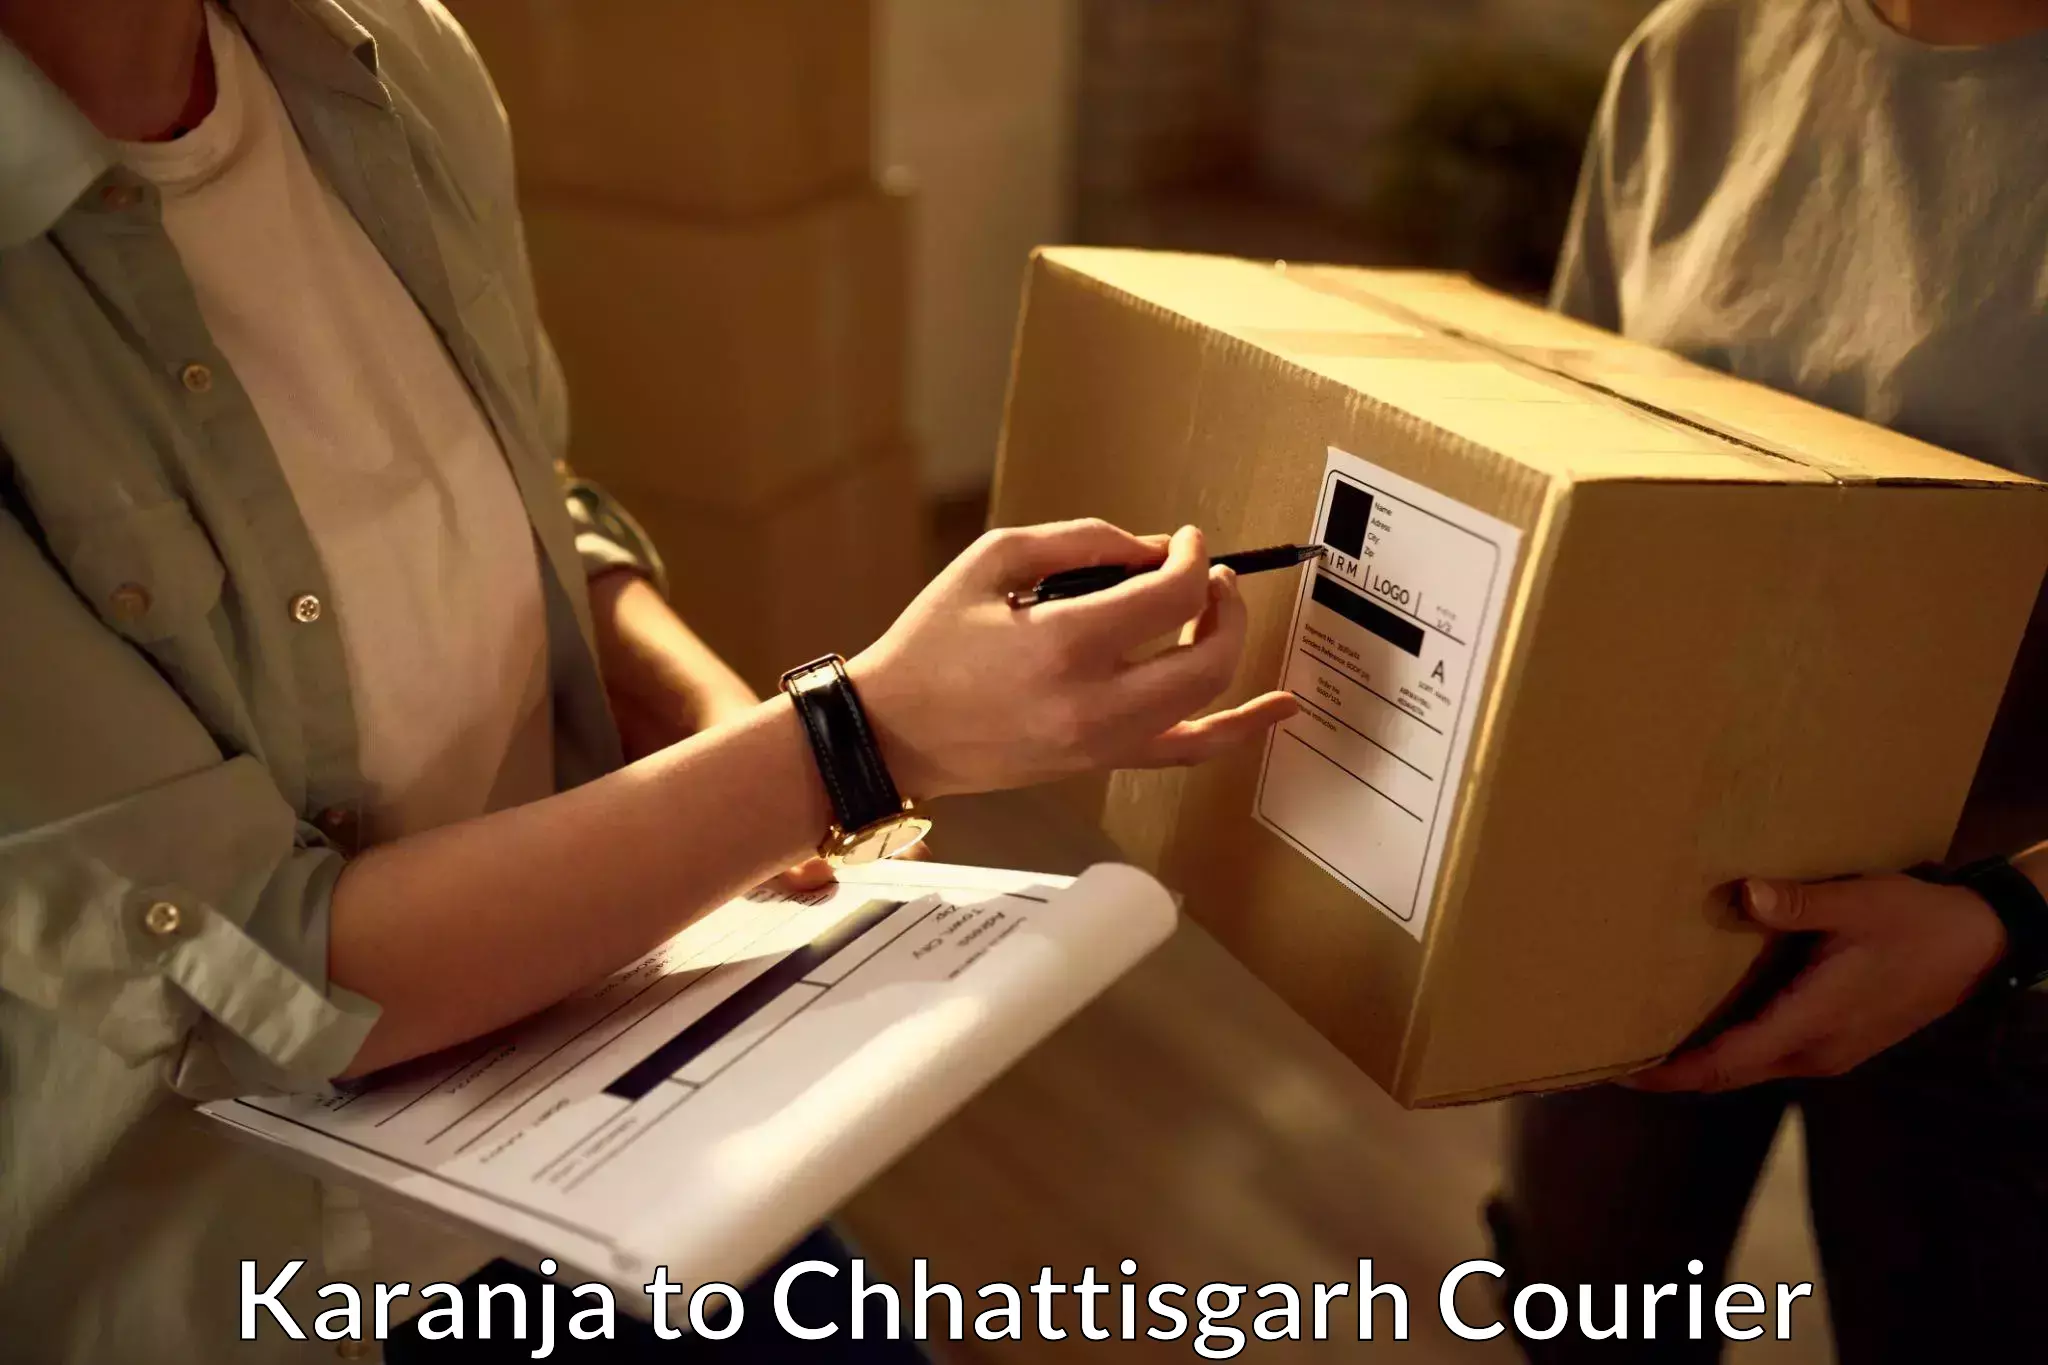 Cash on delivery service Karanja to Chhattisgarh